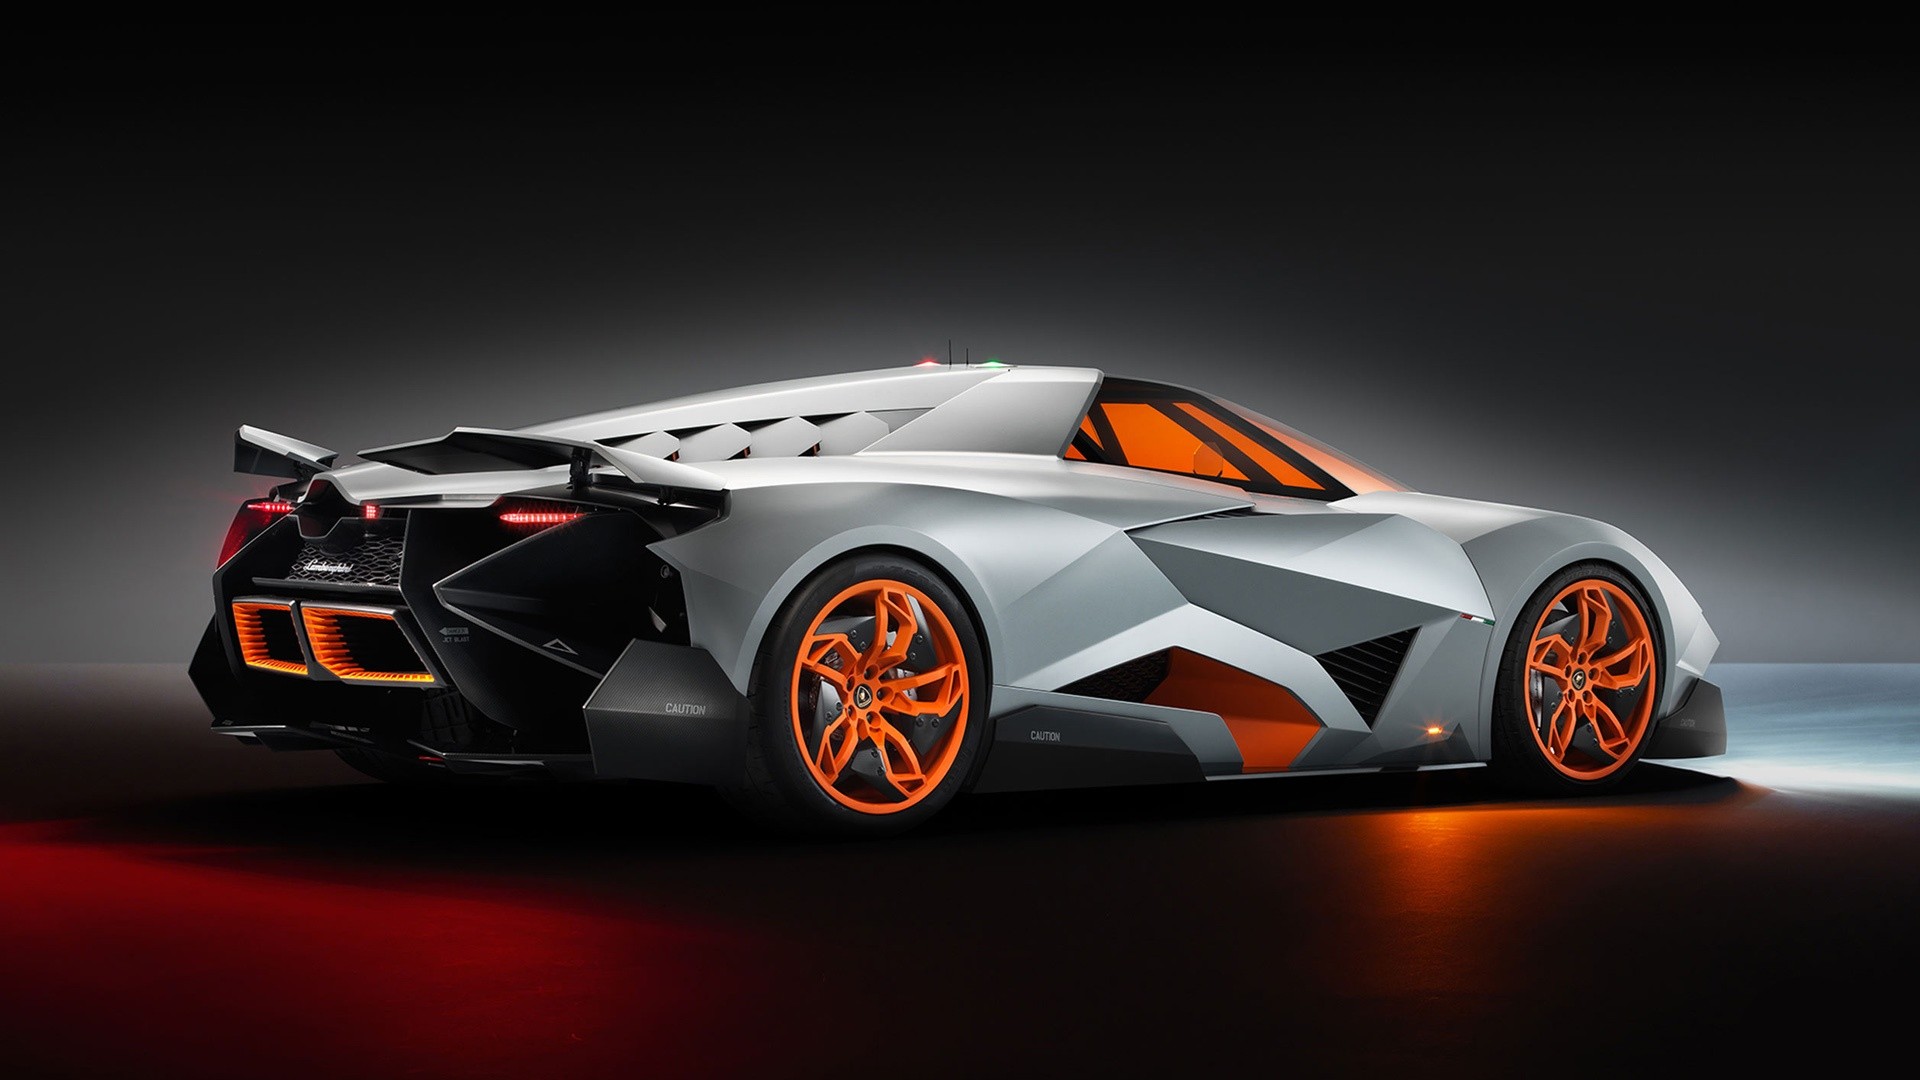 Lamborghini Veneno Wallpapers High Resolution with HD Wallpaper Resolution px 271.73 KB Car Iphone High